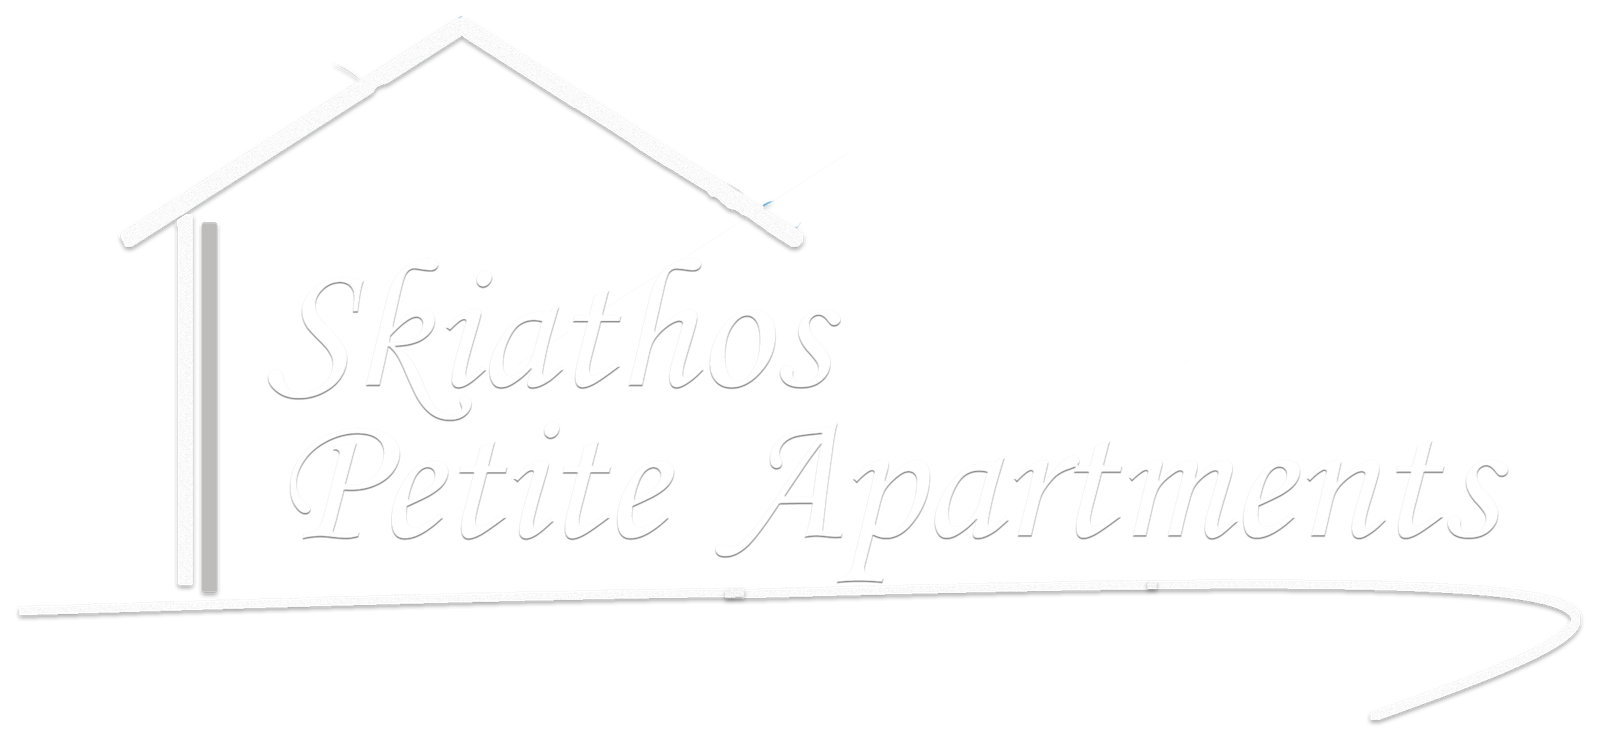 Skiathos Petite Apartments | Impressum - Skiathos Petite Apartments